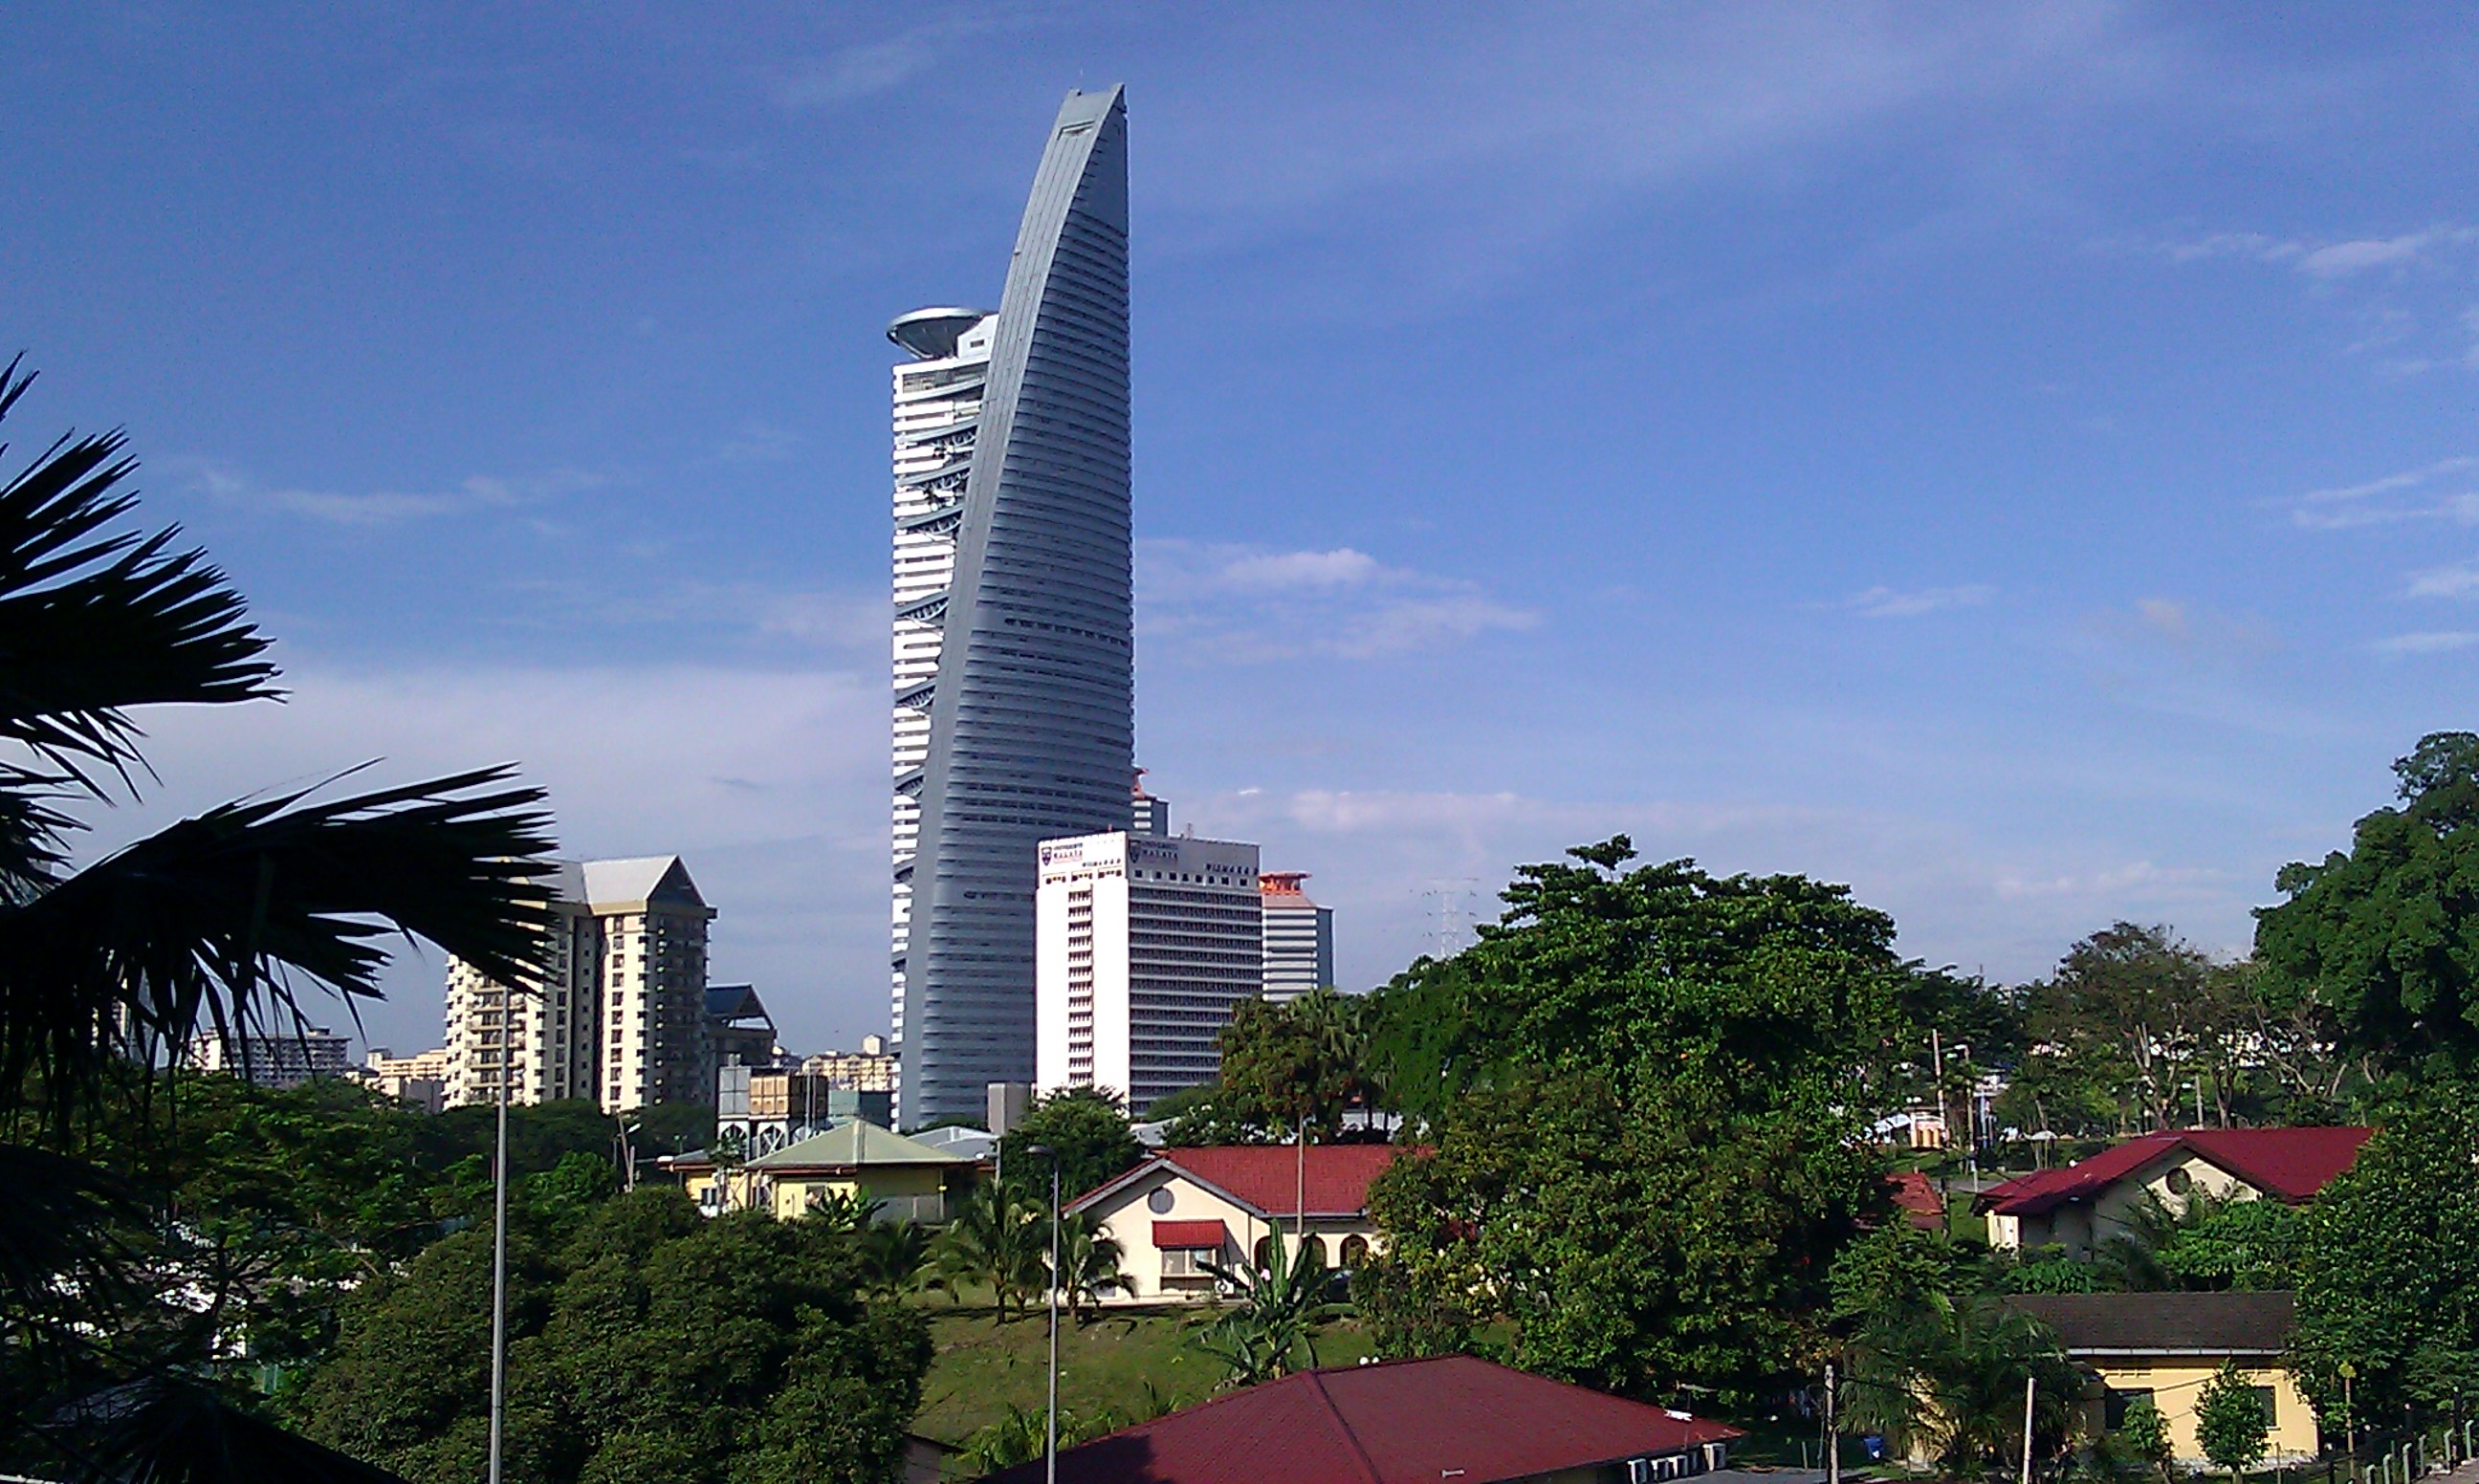 TM Tower, Kuala Lumpur